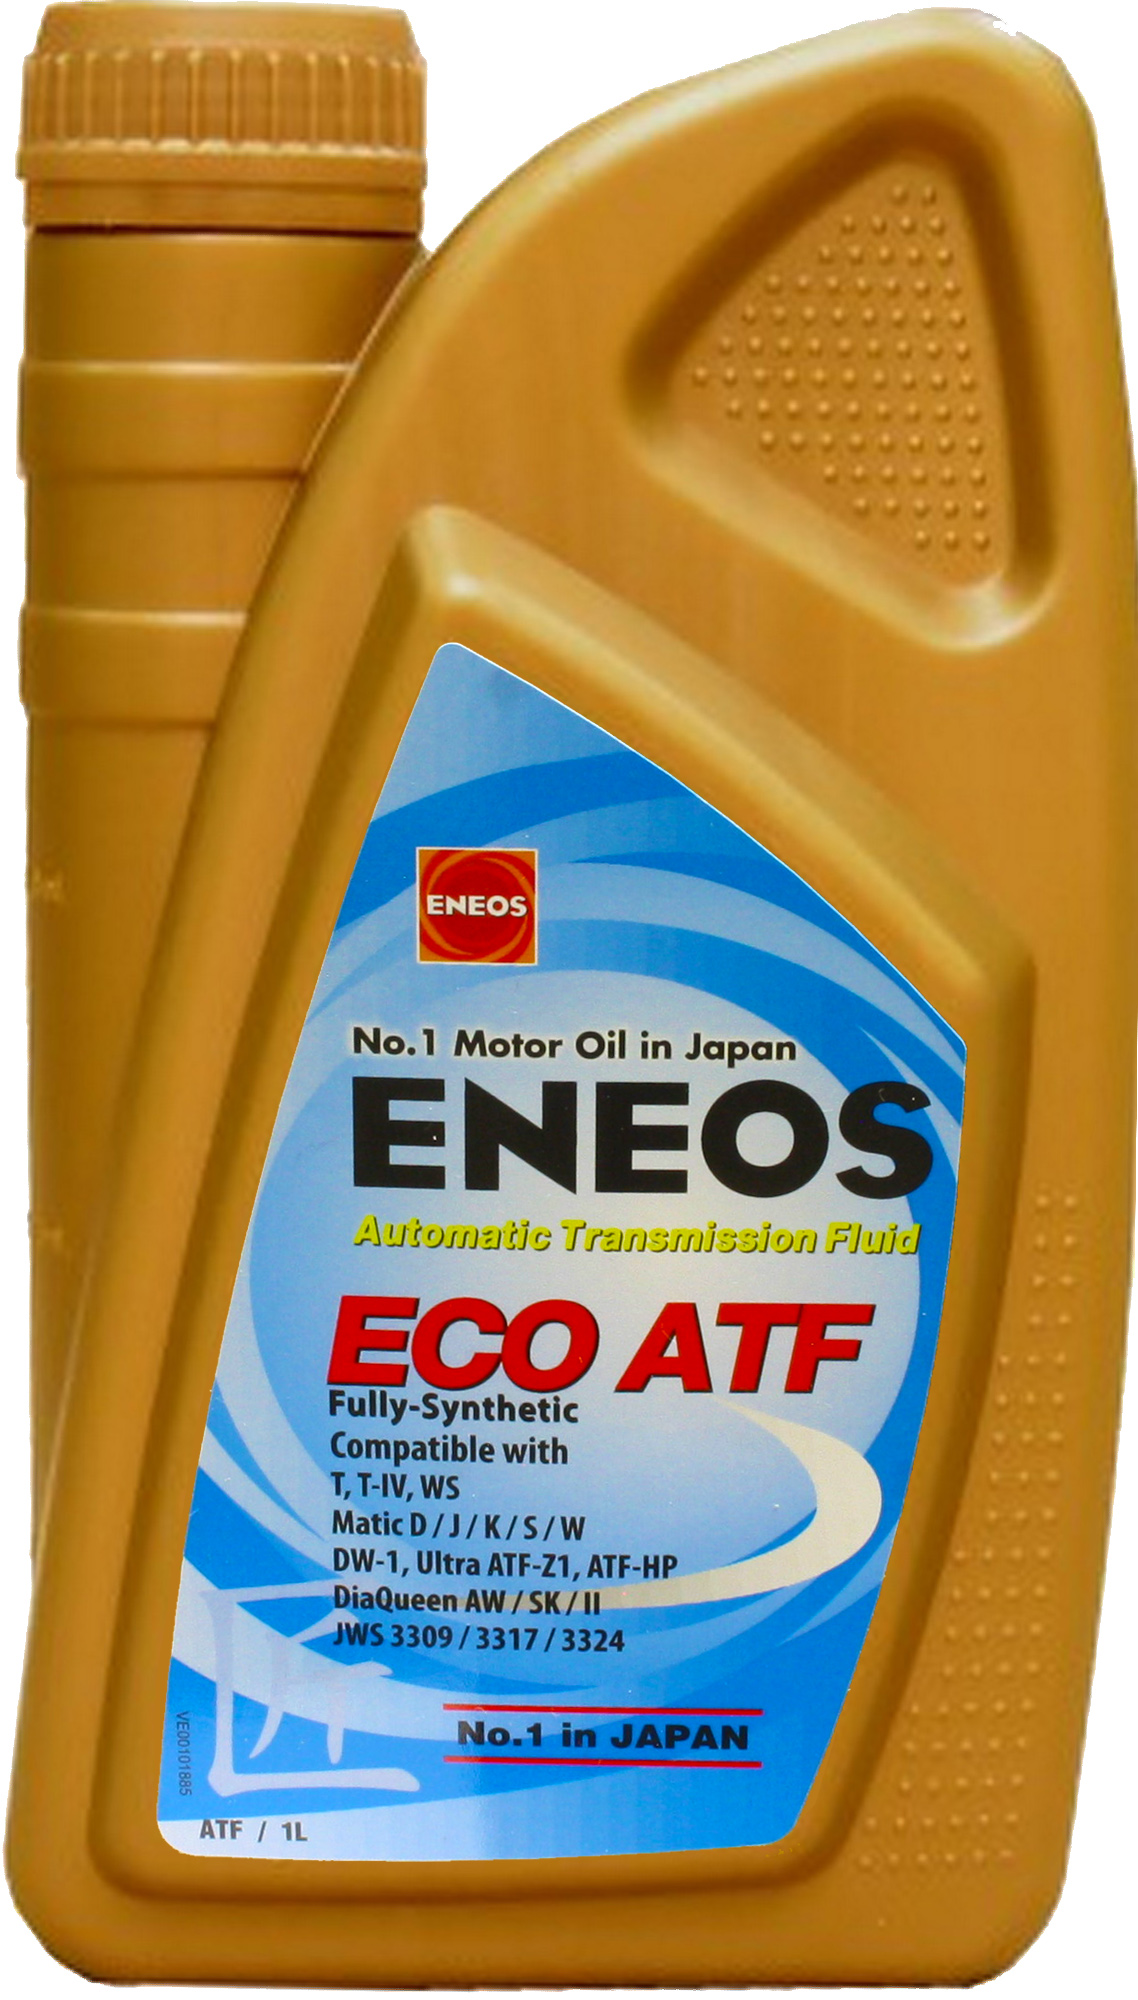 ENEOS ECO ATF automataváltó olaj